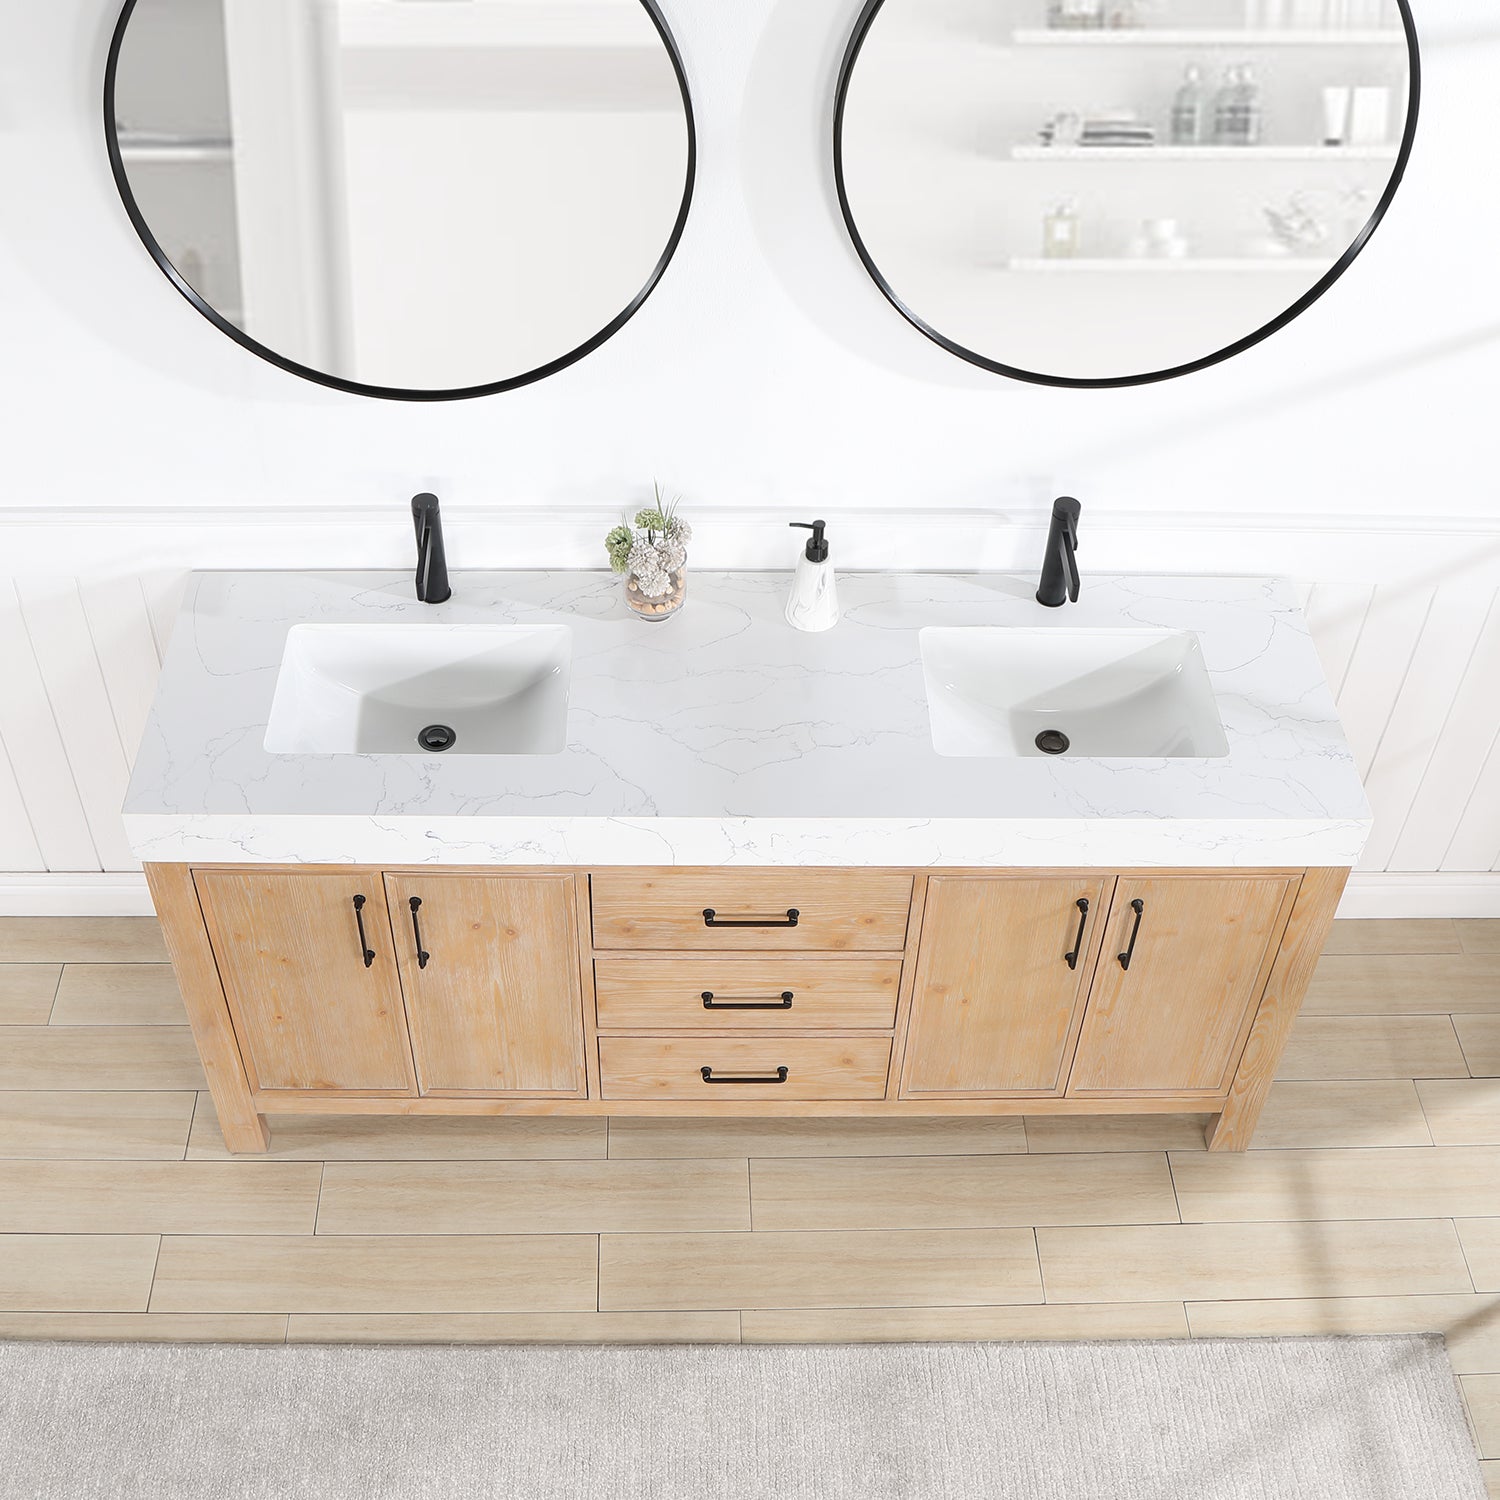 León 72in. Free-standing Double Bathroom Vanity in Fir Wood Brown with Composite top in Lightning White